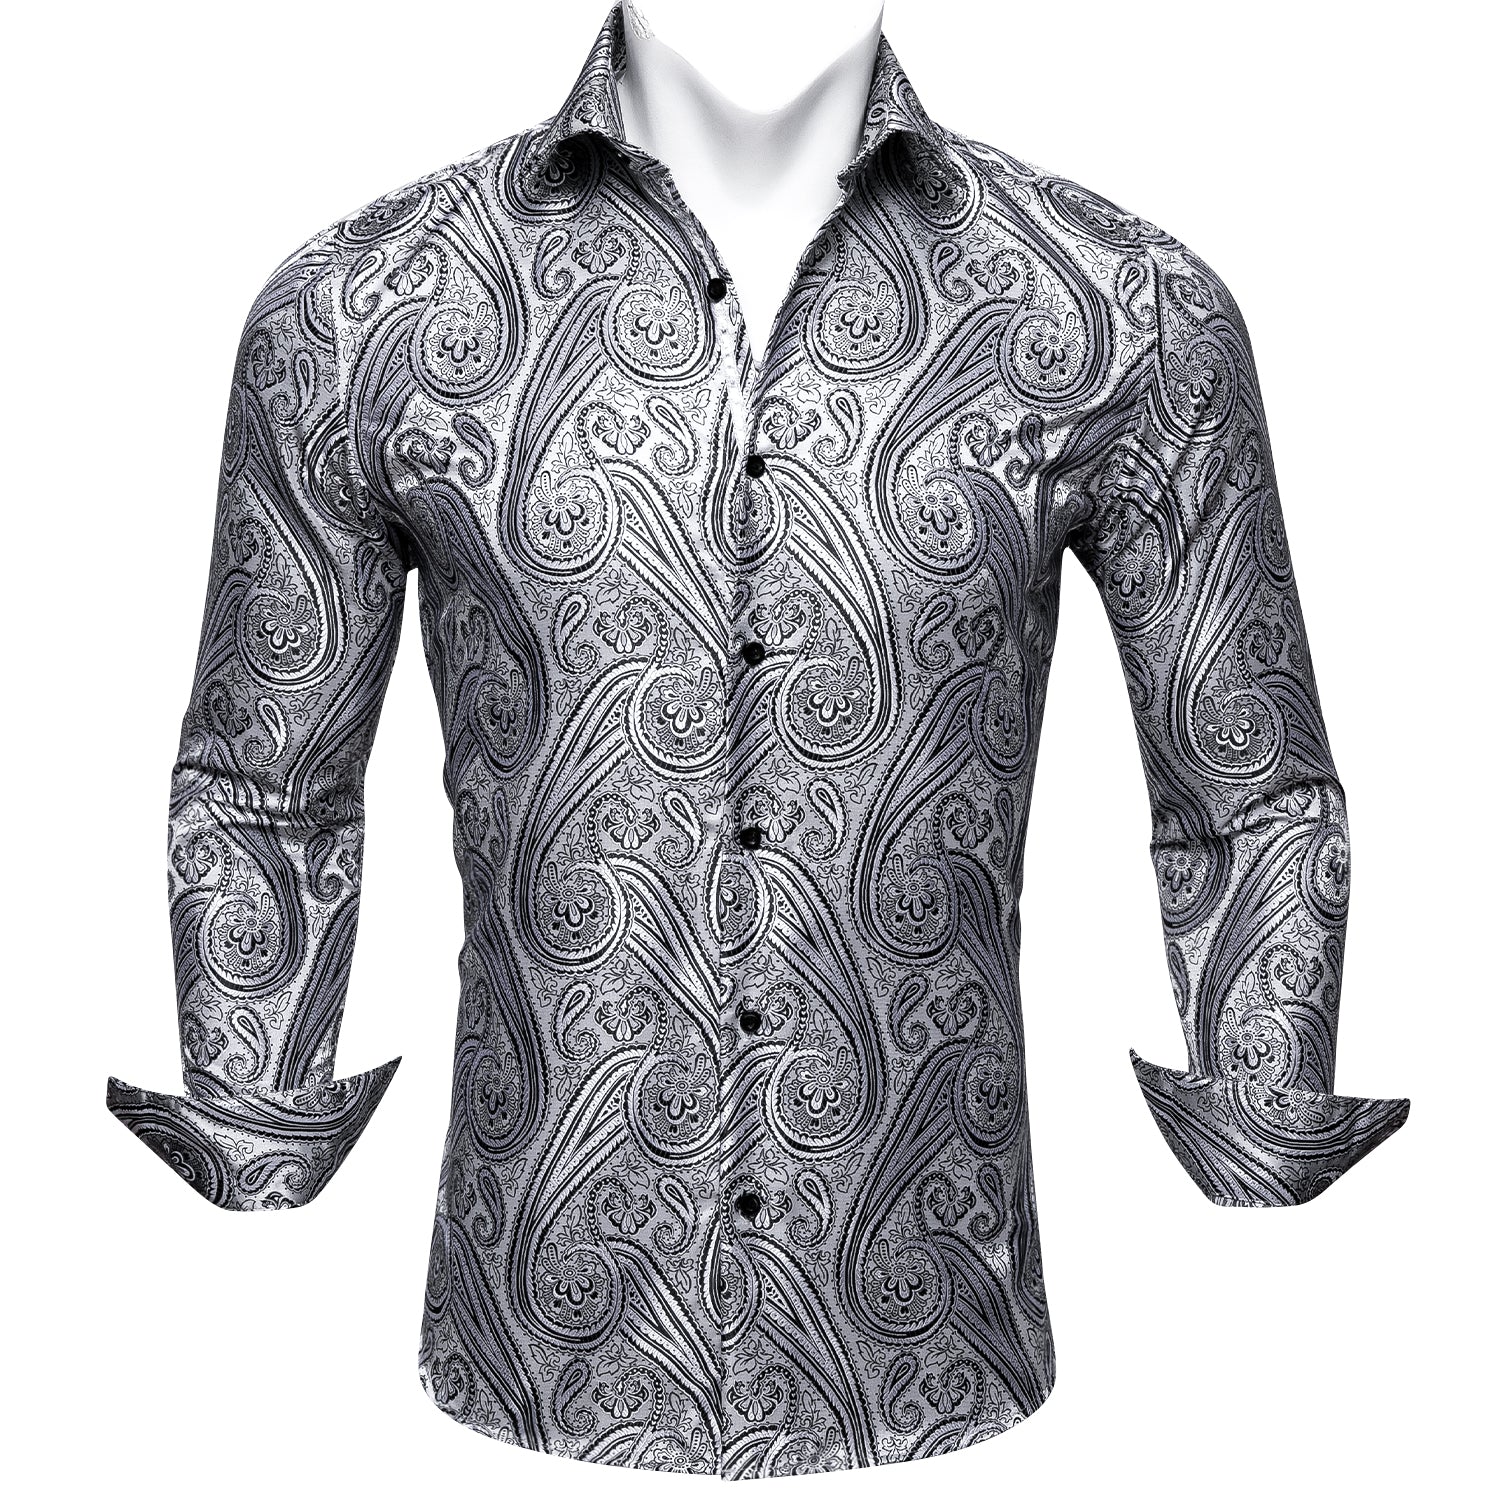 Barry.wang Classic Silver Silk Paisley Tribal Long Sleeve Daily Slim Fit Men's Shirt